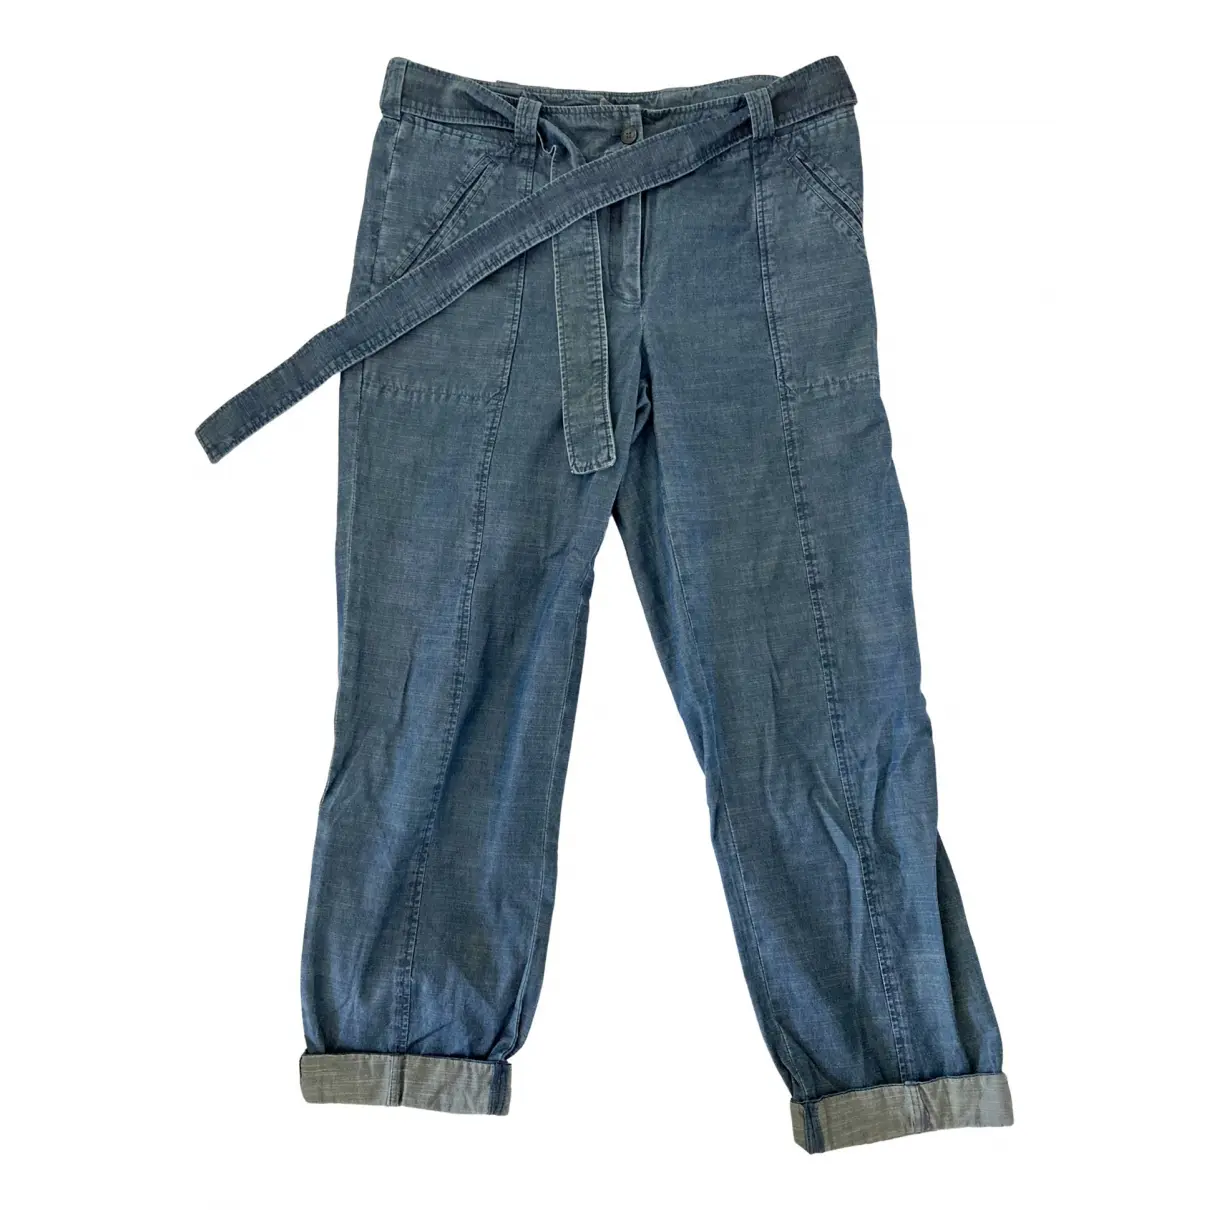 Jean Sailor bootcut jeans APC